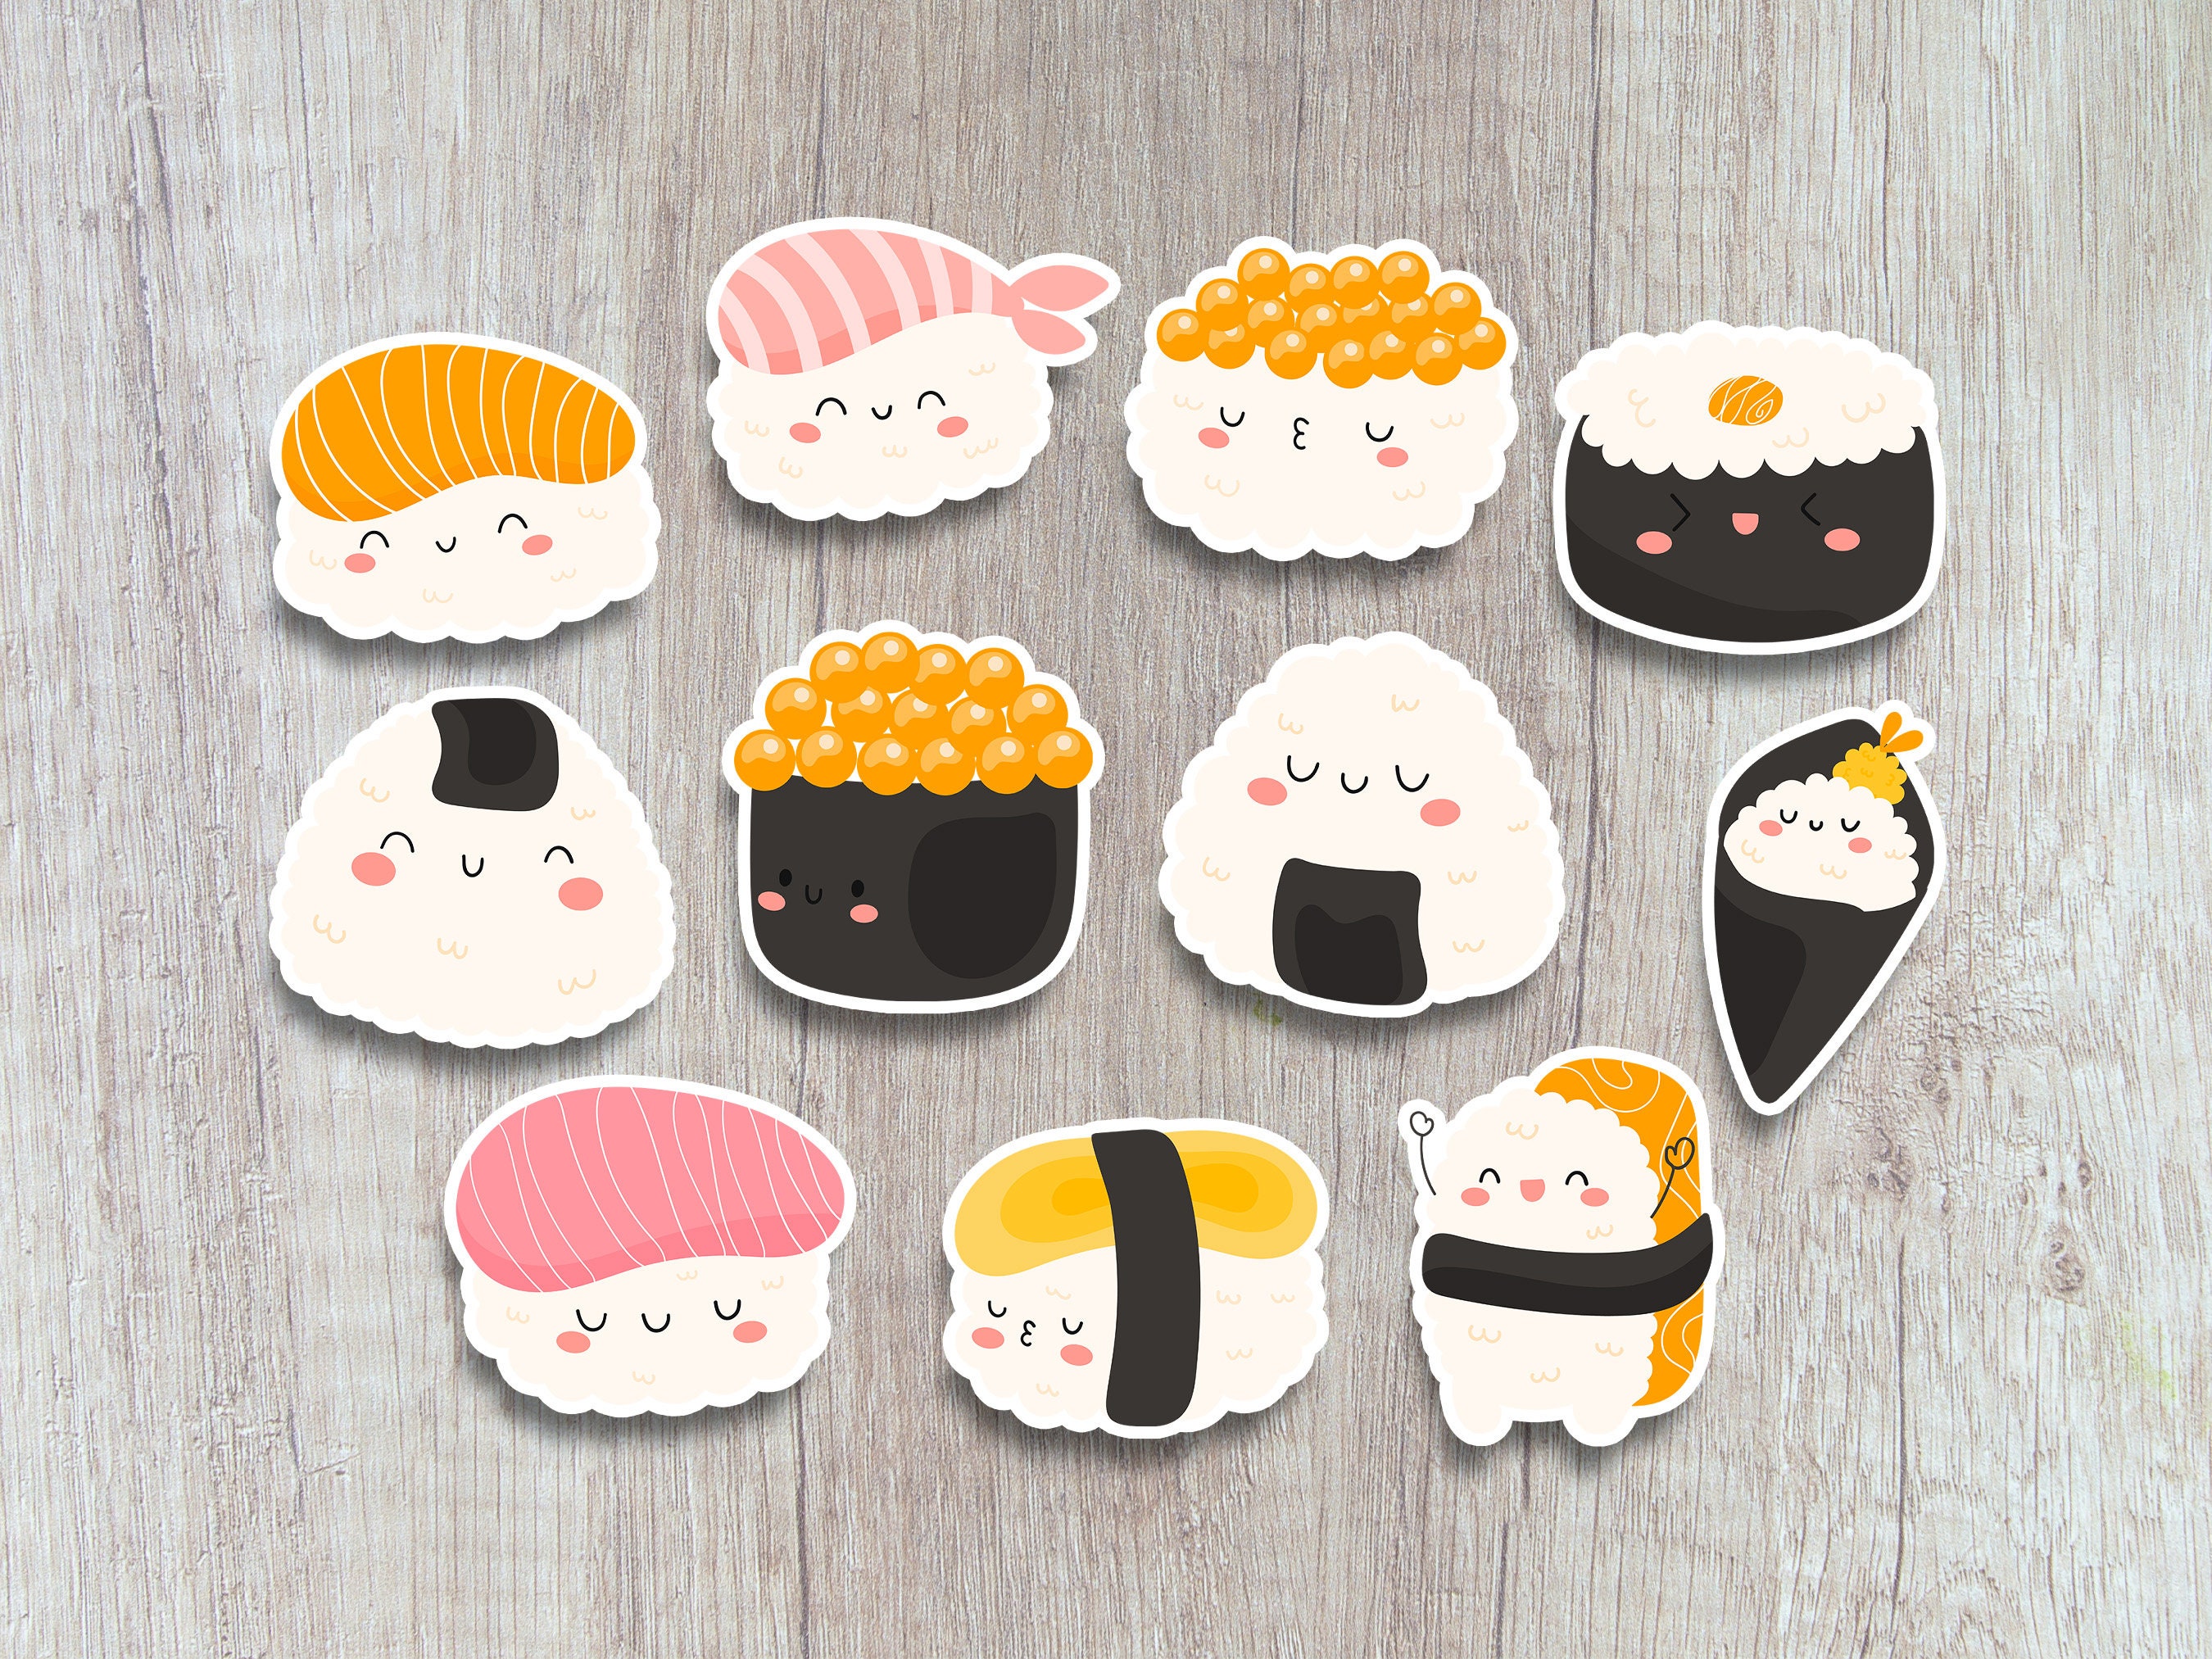 Hinkler: Kawaii Sushi & Bento Box Set - Learn To Make Cute Sushi, Japanese Cooking  Kit, w/ Utensils, Rolling Mat, Rice Molds & More, Kids & Adults 